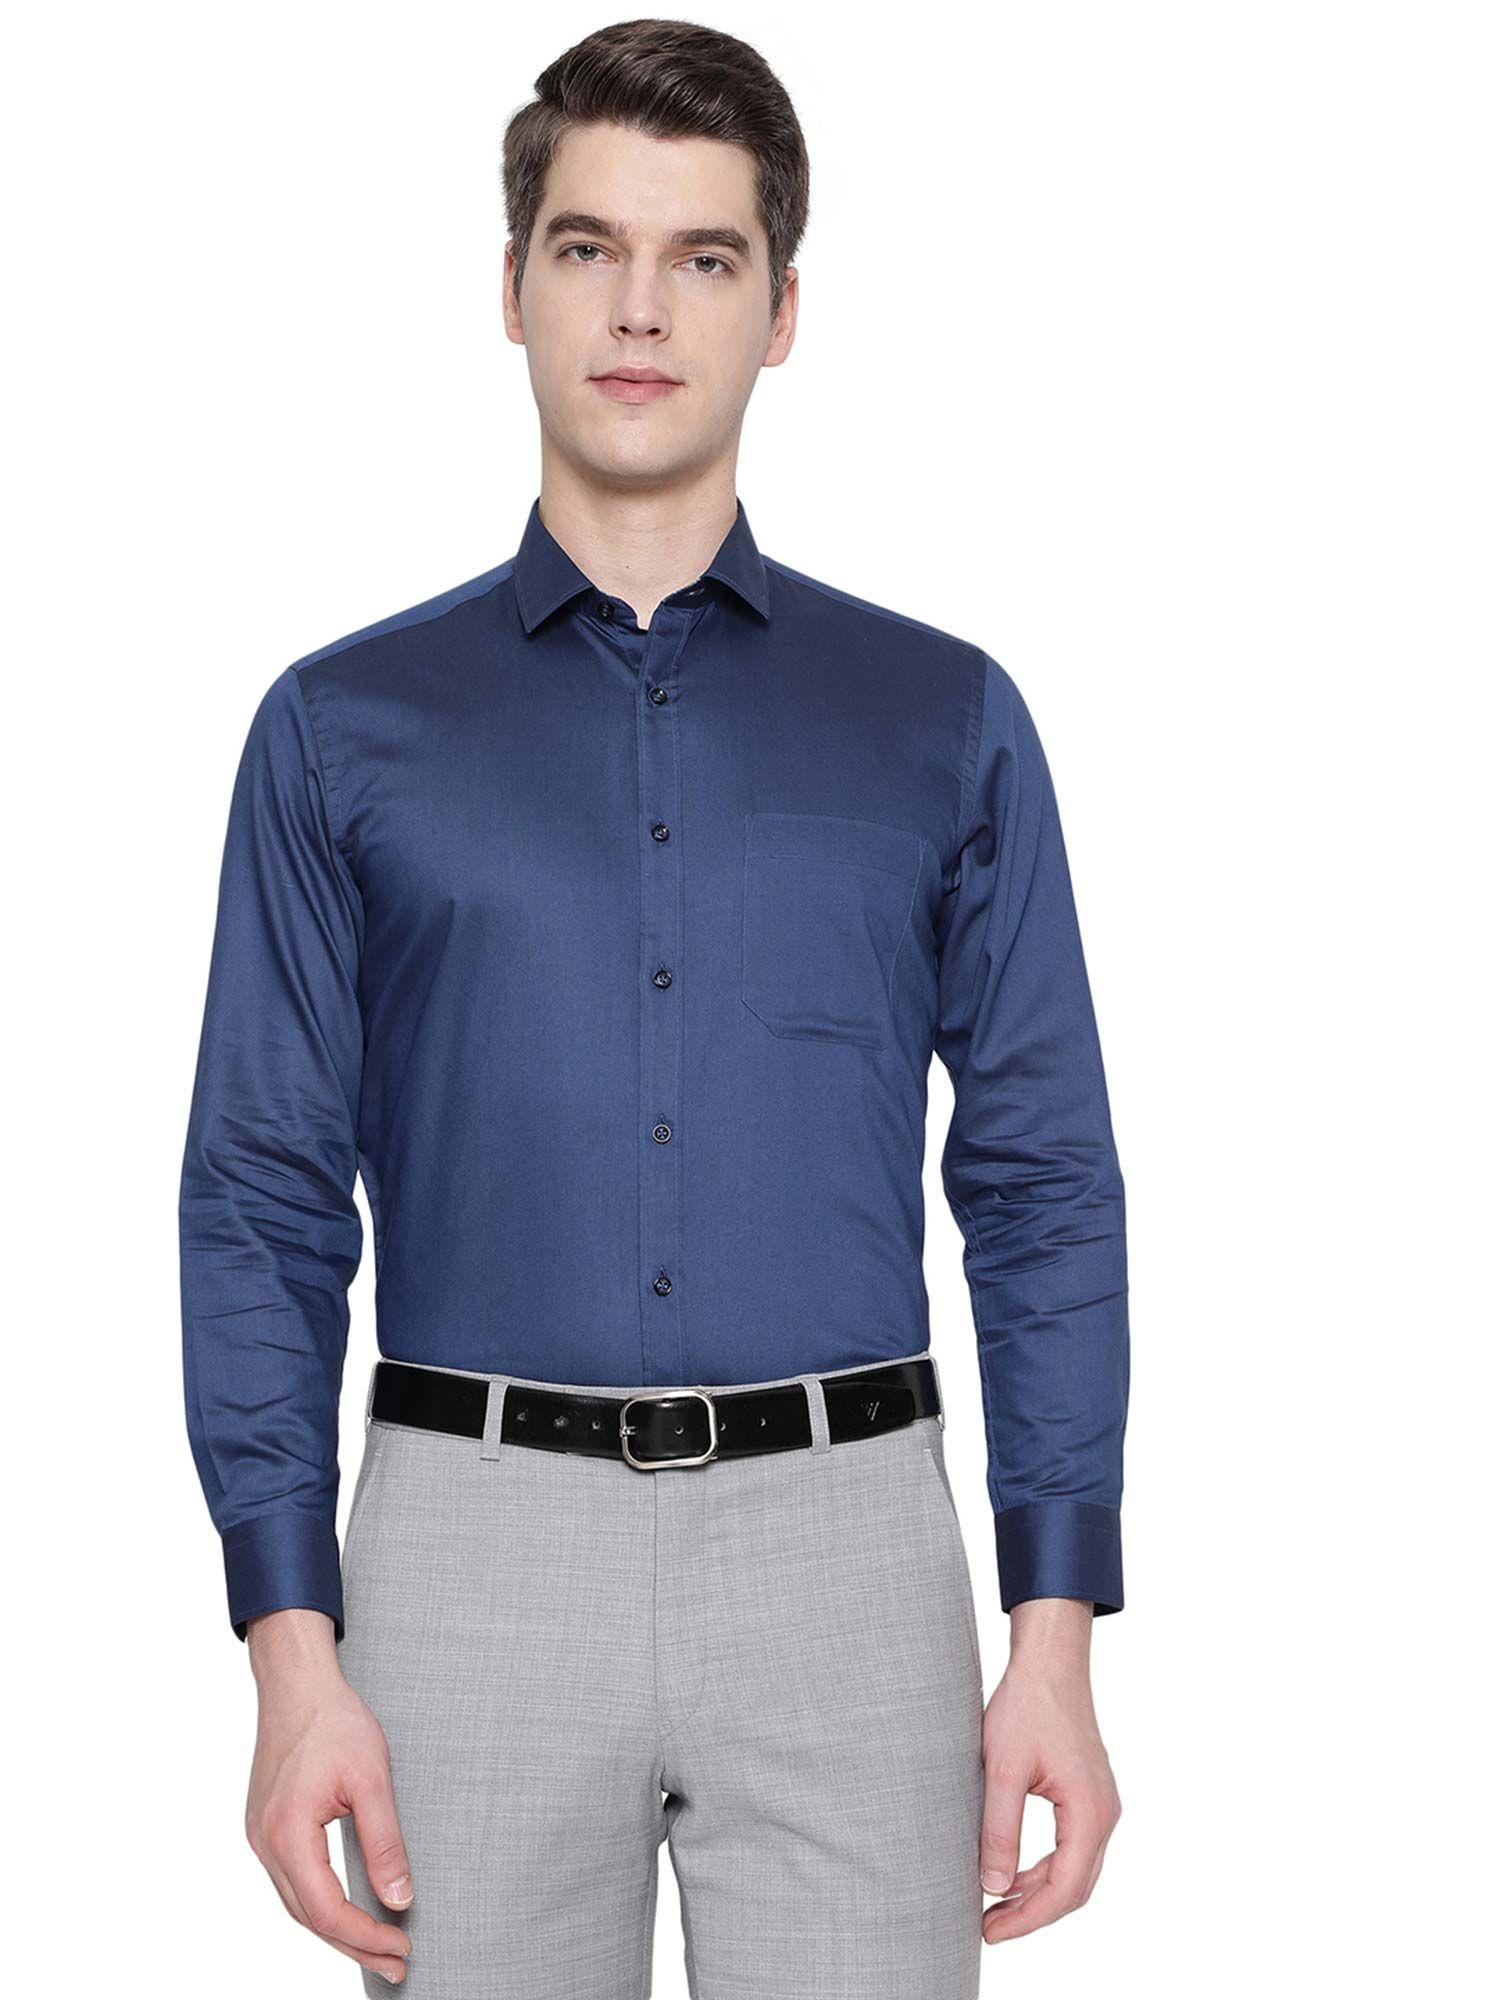 mens navy blue cotton blend slim fit solid formal party wear shirt